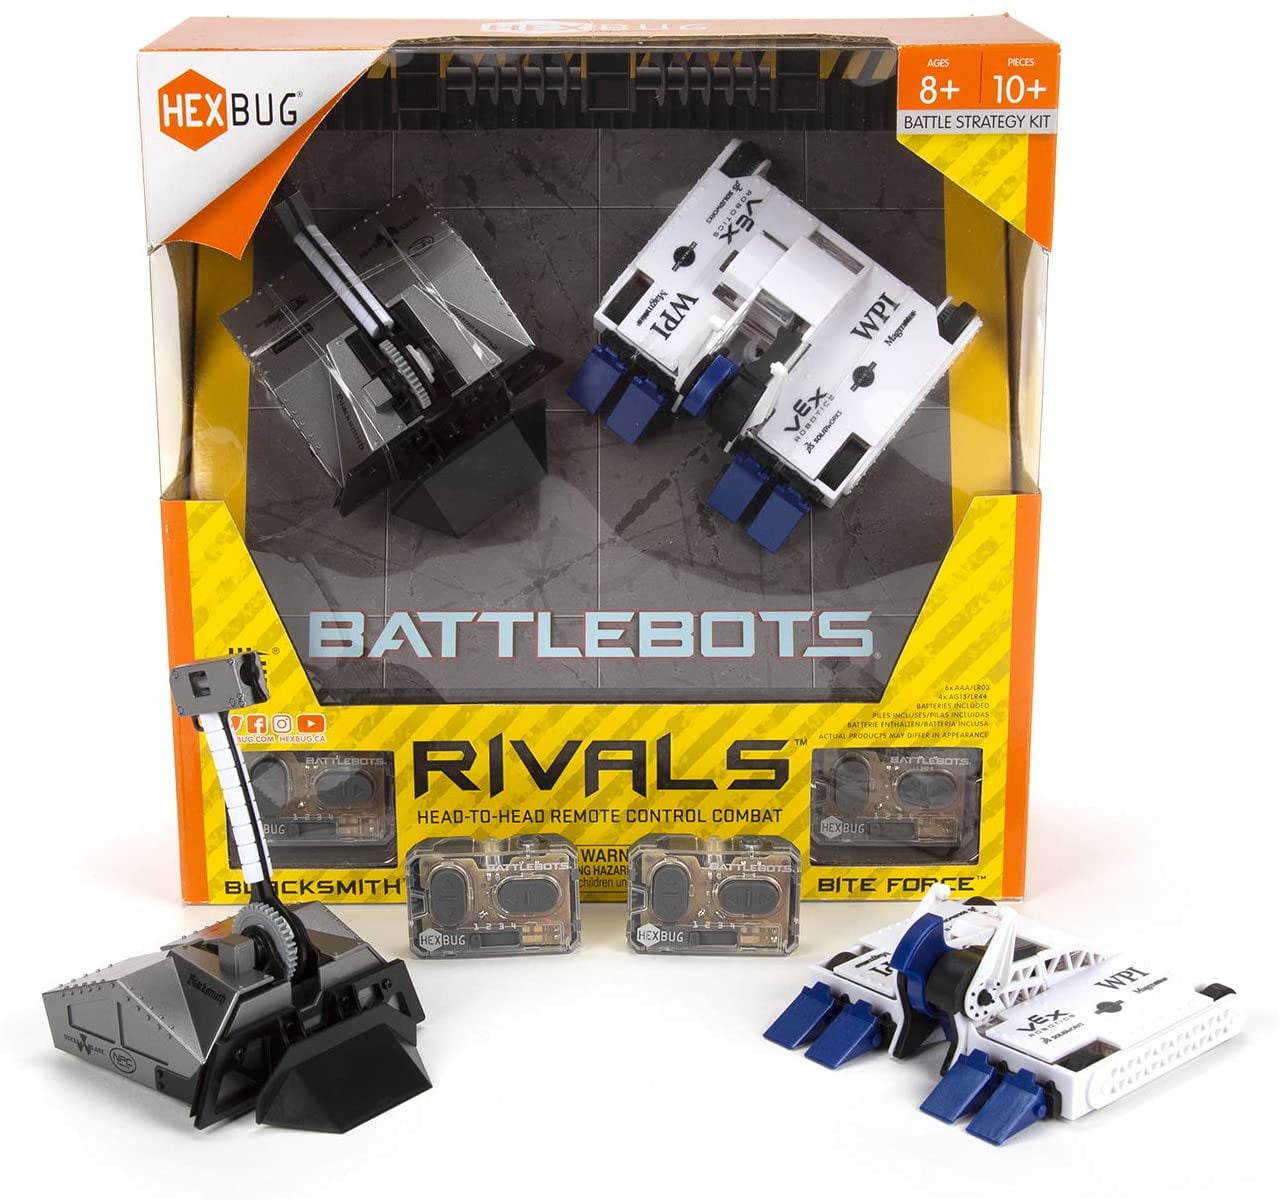 HEXBUG Warriors Battling Robots Blue Set X2 for sale online 